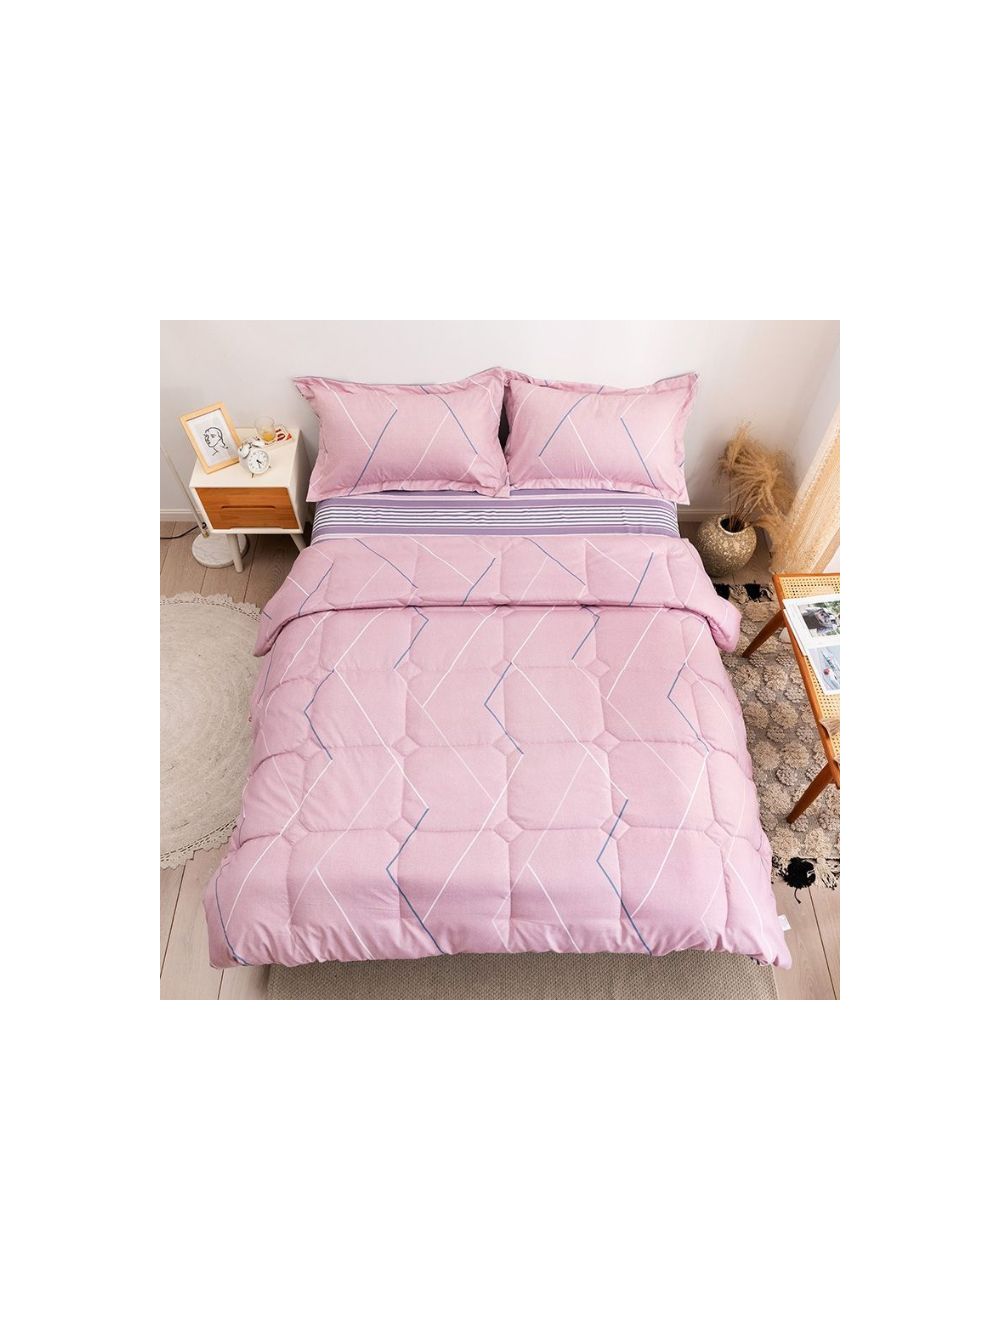 Rishahome 4 Piece King Size Comforter Set Pink 220x240cm-PFLCS0005